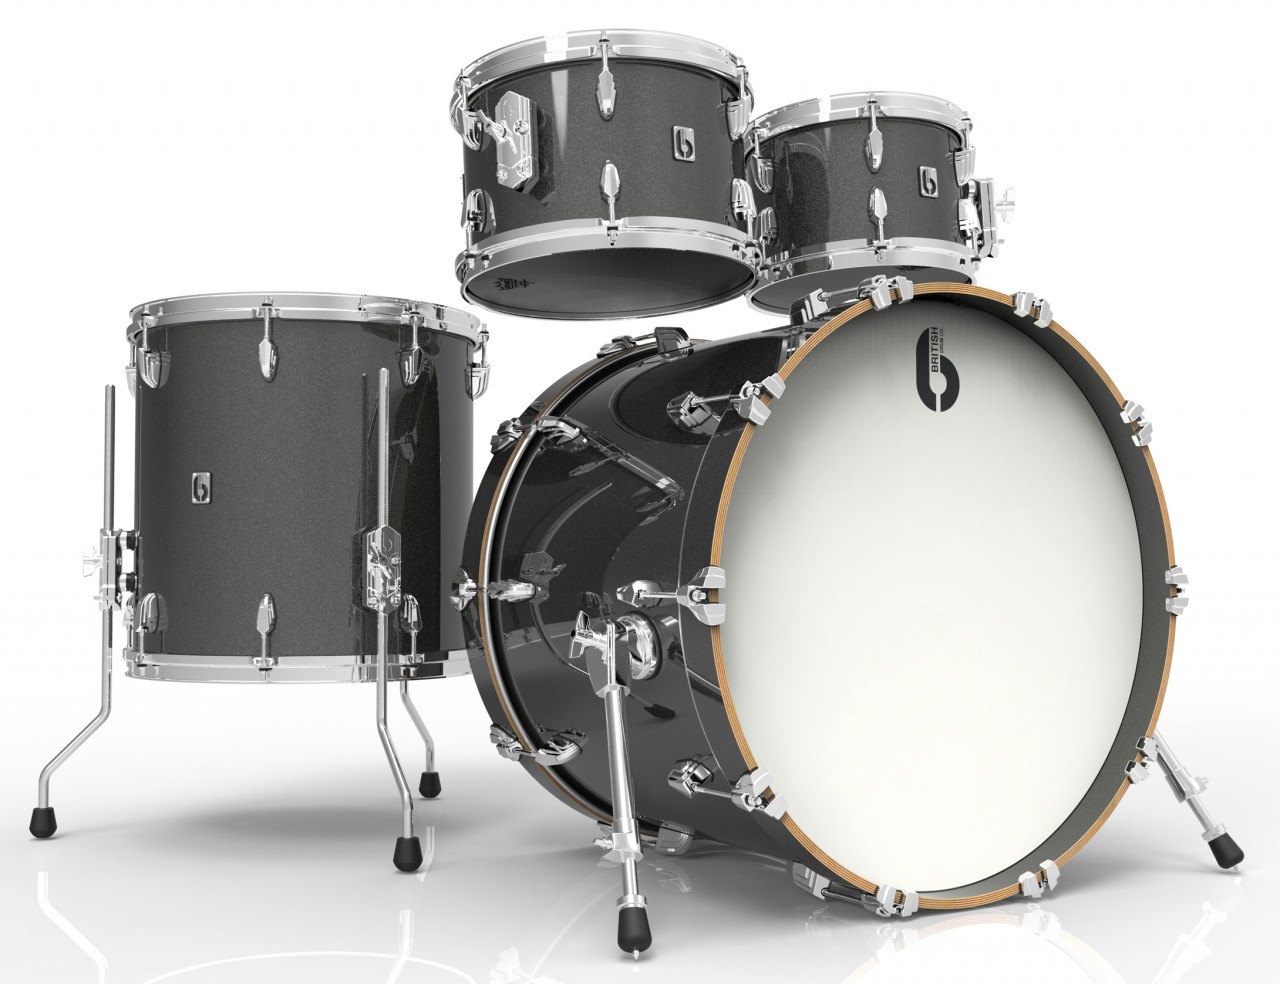 Legend Fusion 22 4-piece drum set, cold-pressed birch 6 mm shells, Night Skye finish